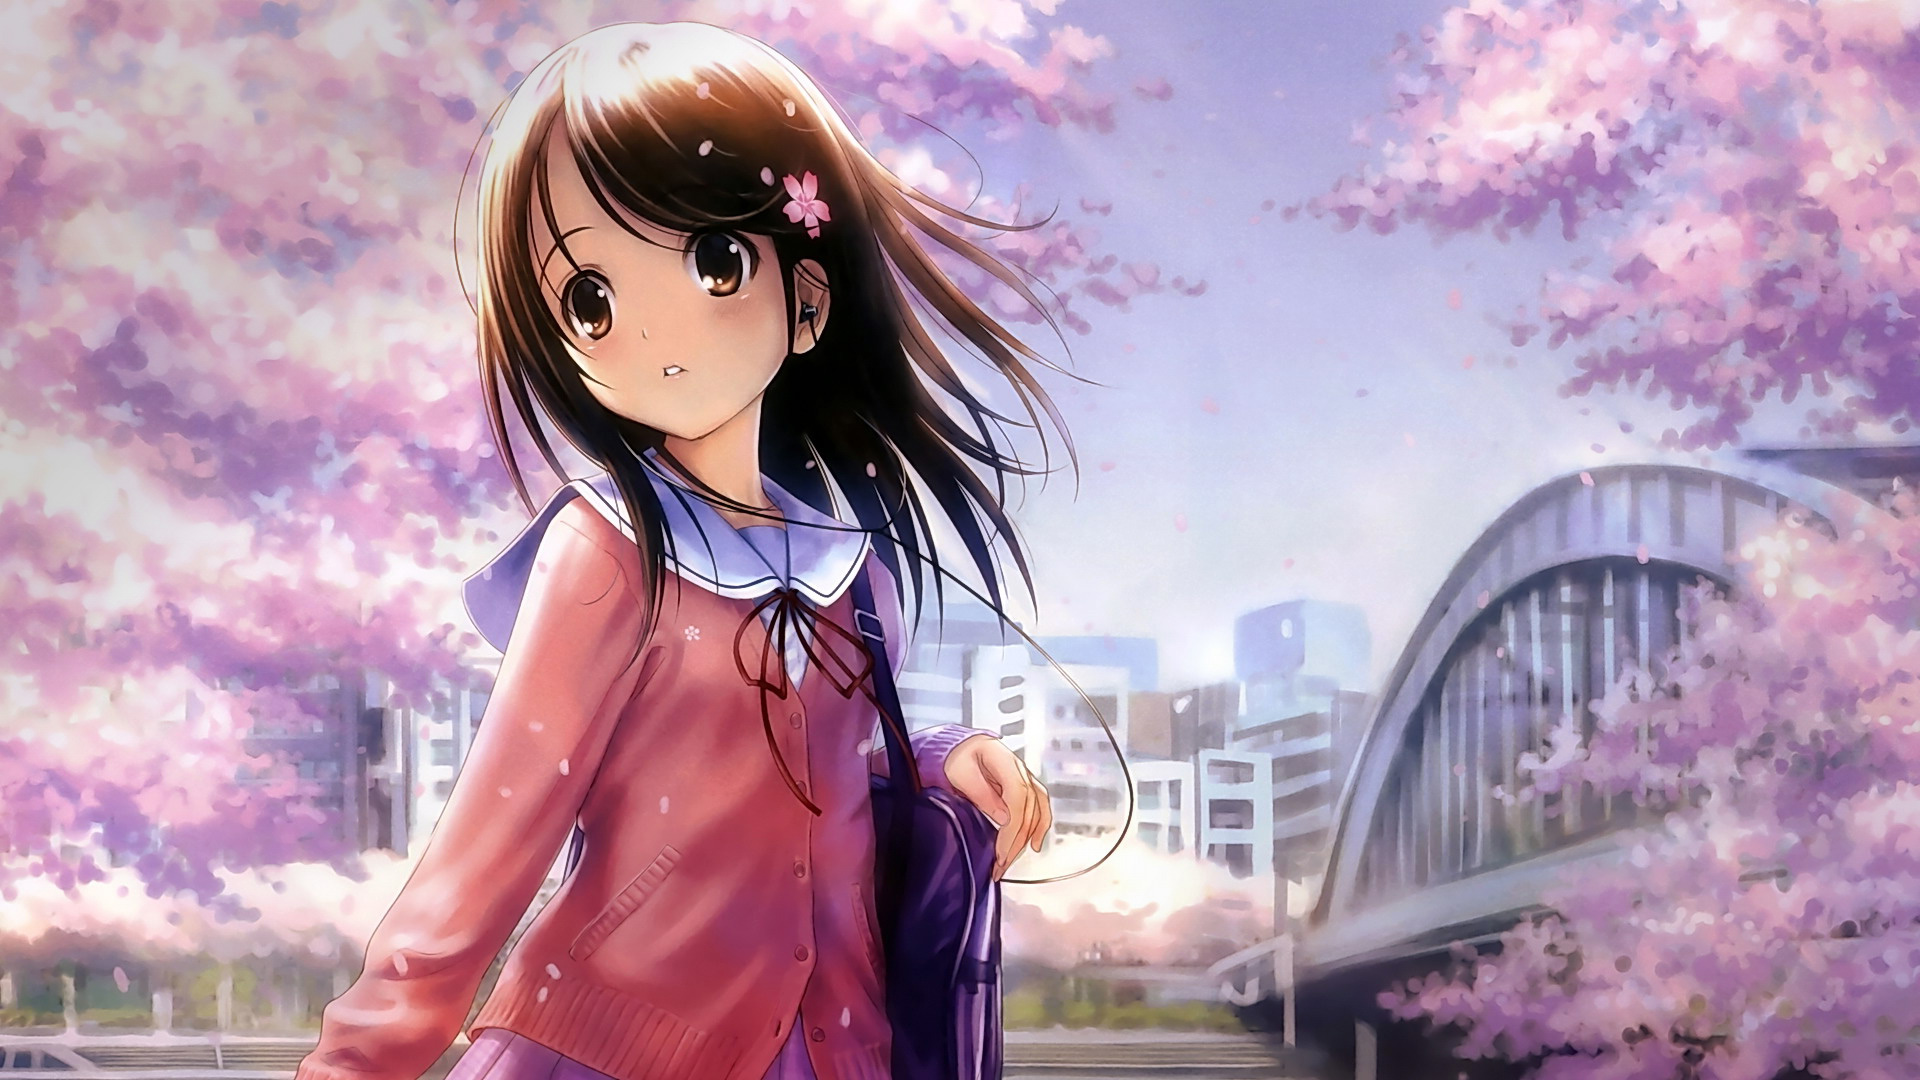 Anime Full HD Wallpapers download 1080p desktop backgrounds